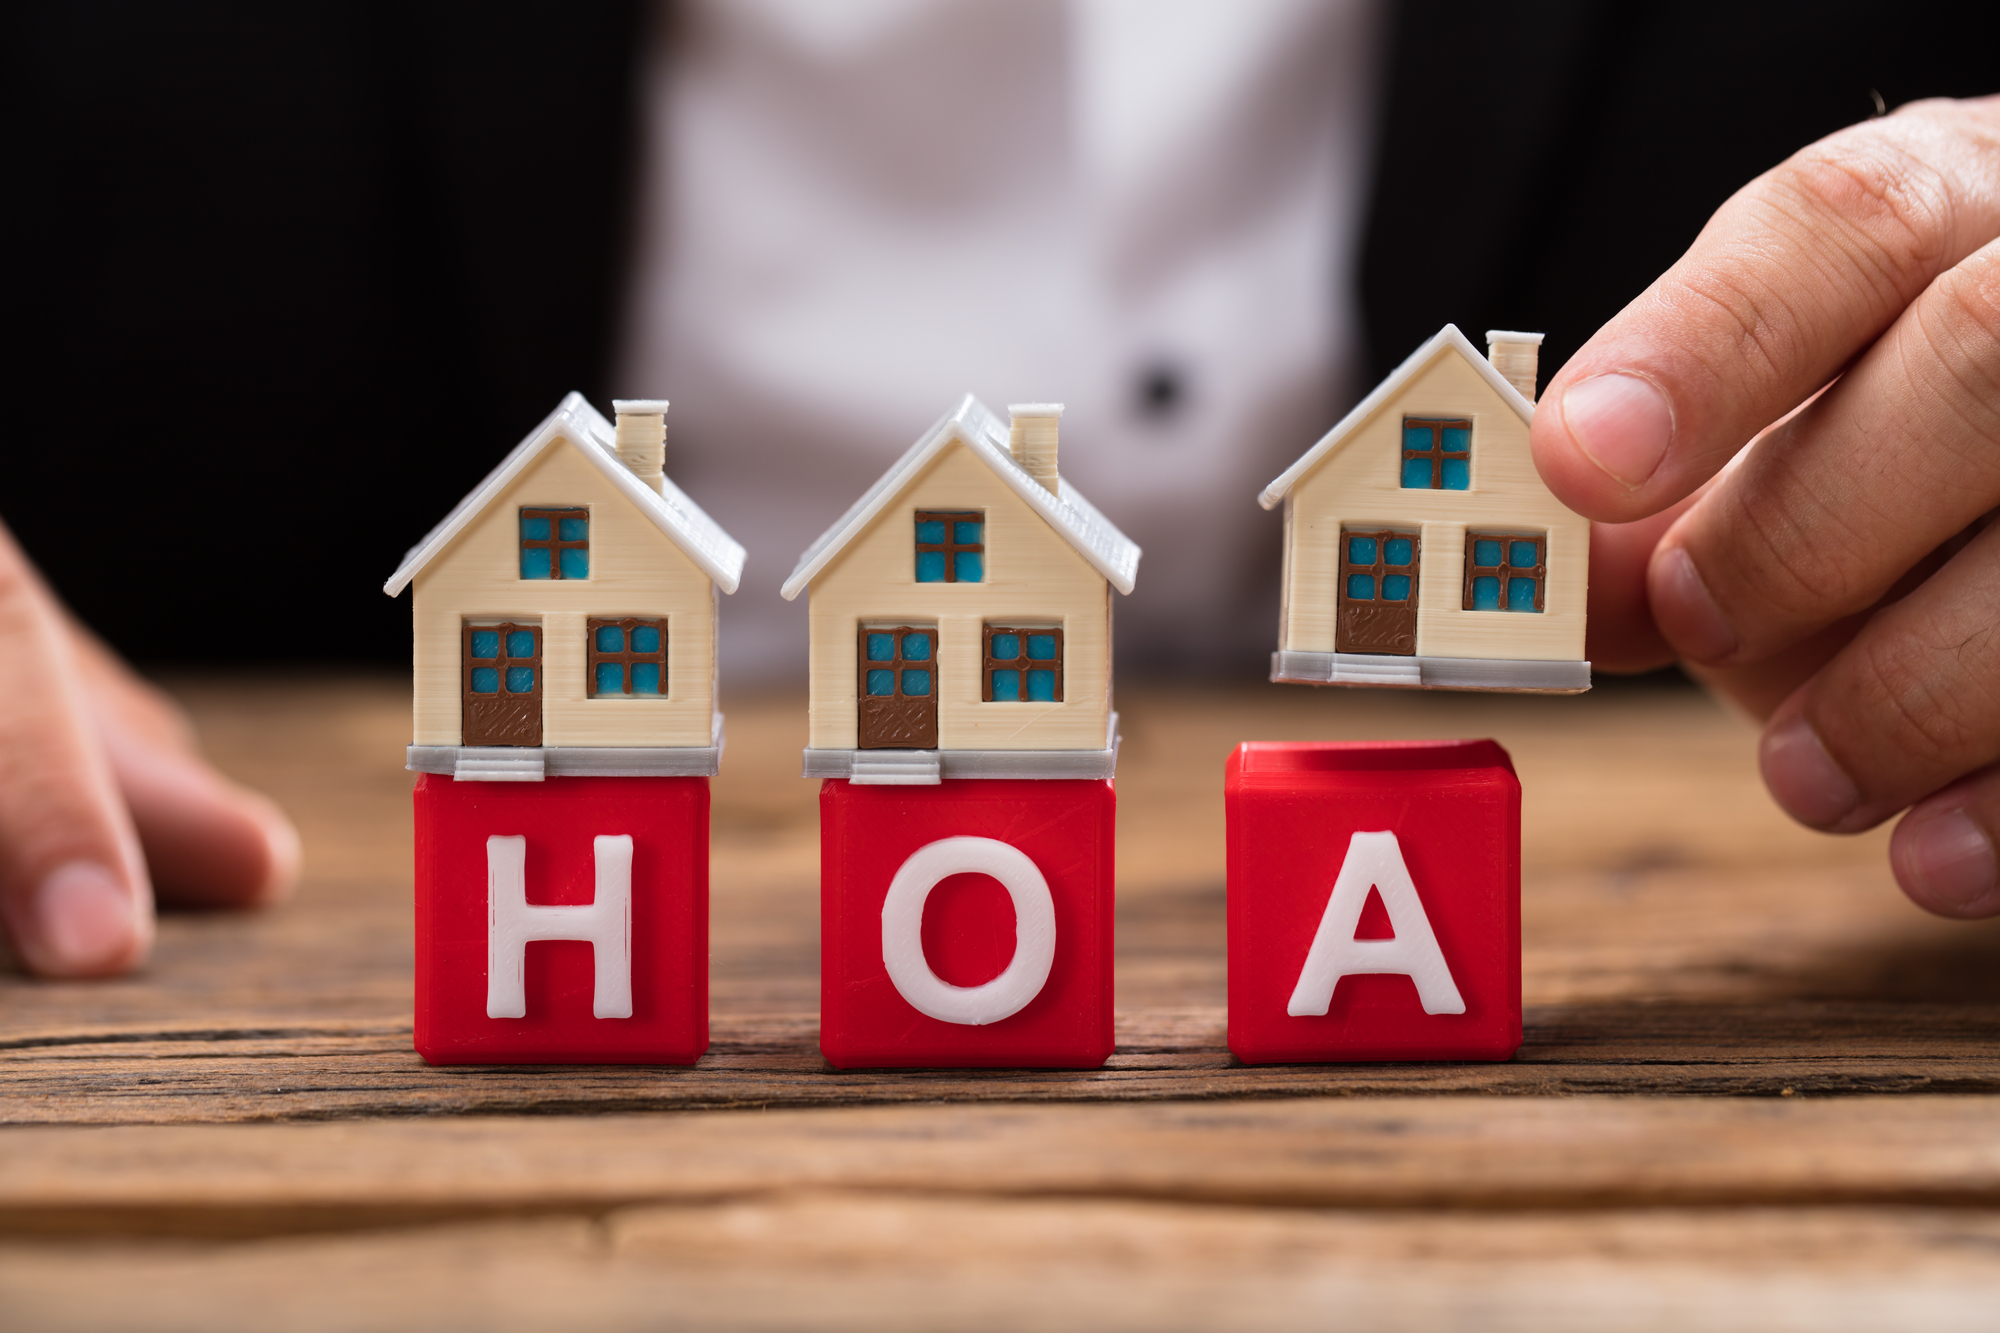 Businesspersons hand placing house model over red HOA blocks on wooden desk